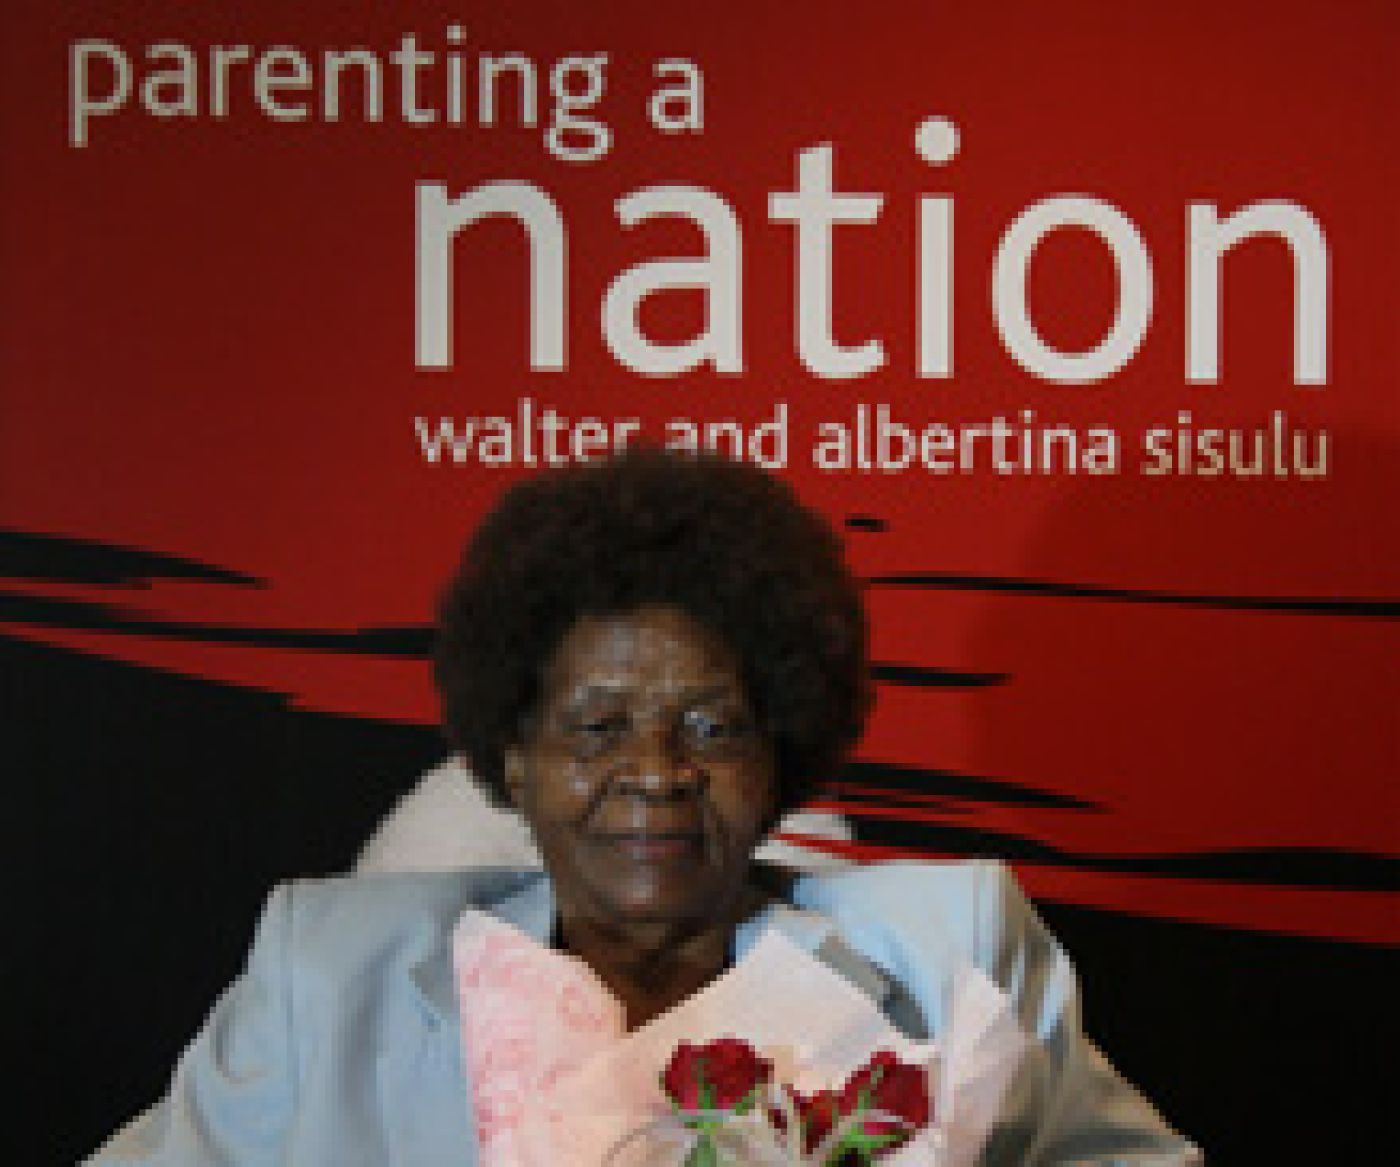 Parenting a Nation - Albertina Sisulu (detail) 